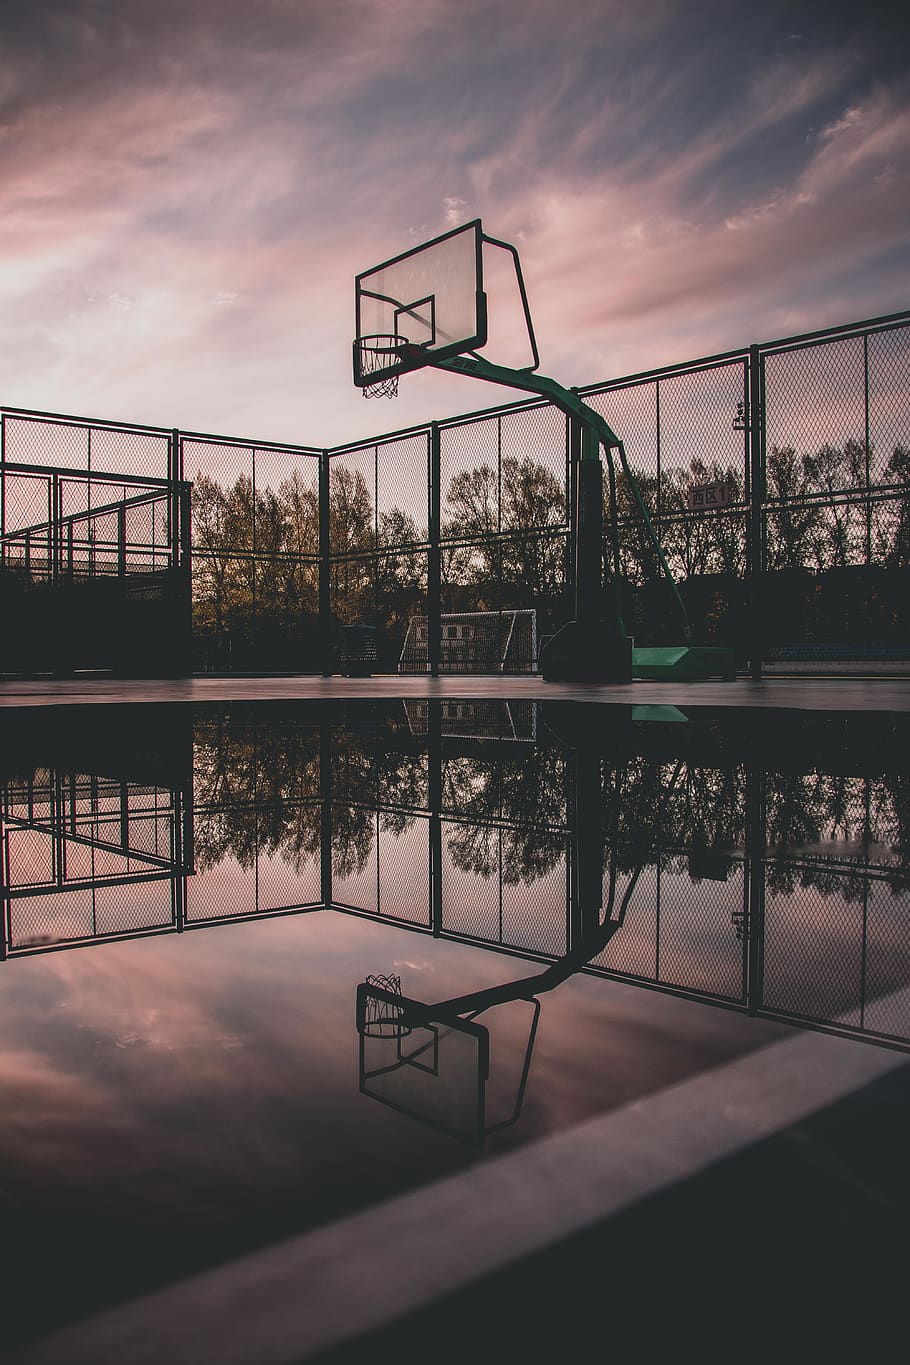 HD wallpaper: Silhouette Photo of Portable Basketball